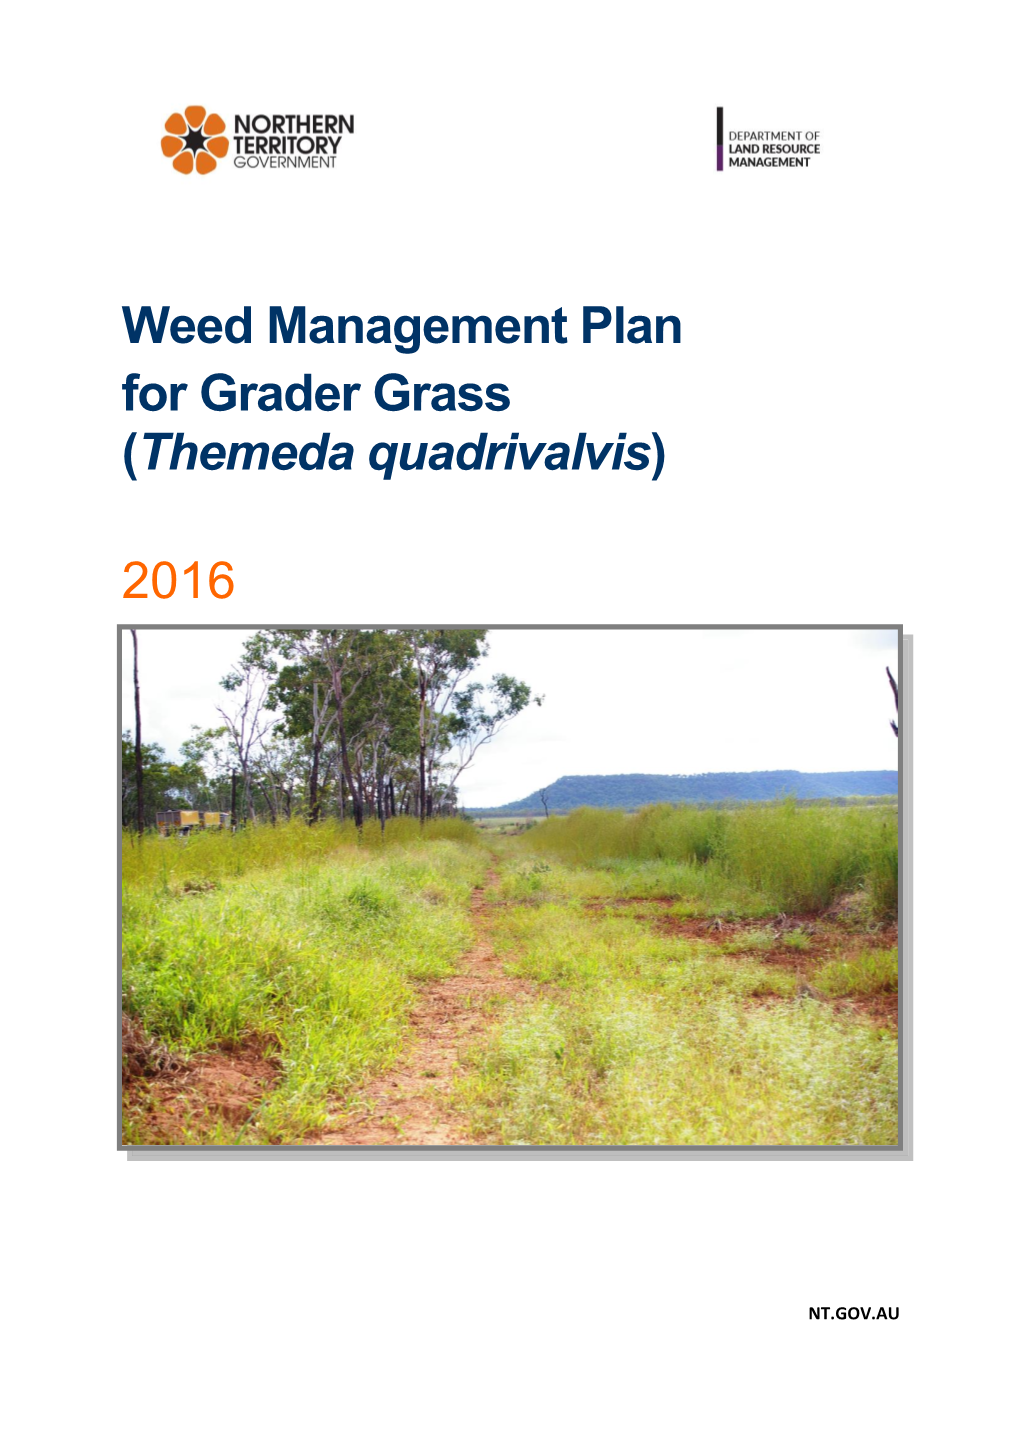 Grader Grass Weed Management Plan